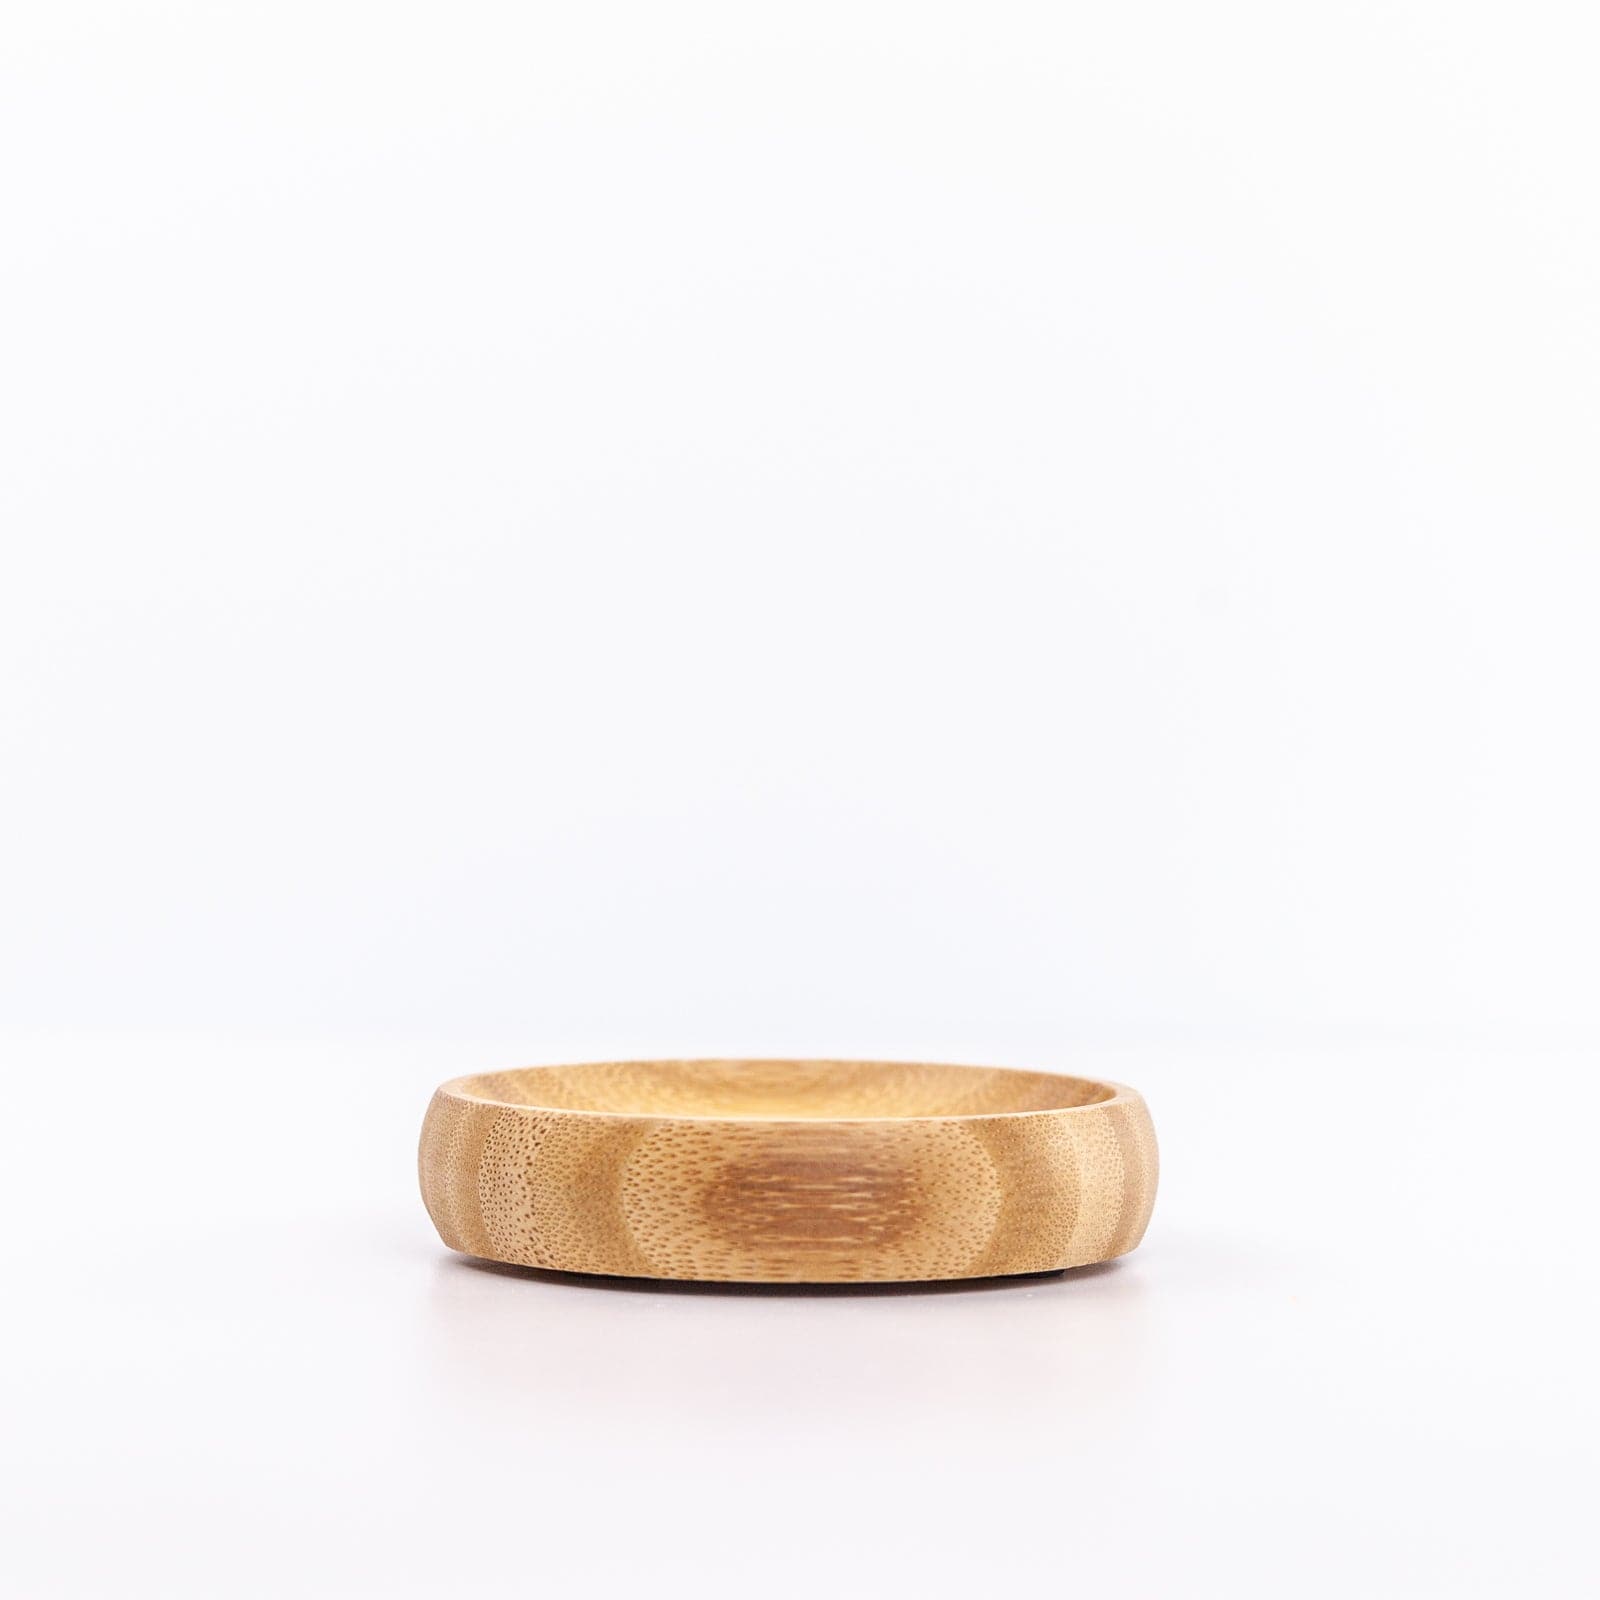 Circular wooden soap dish